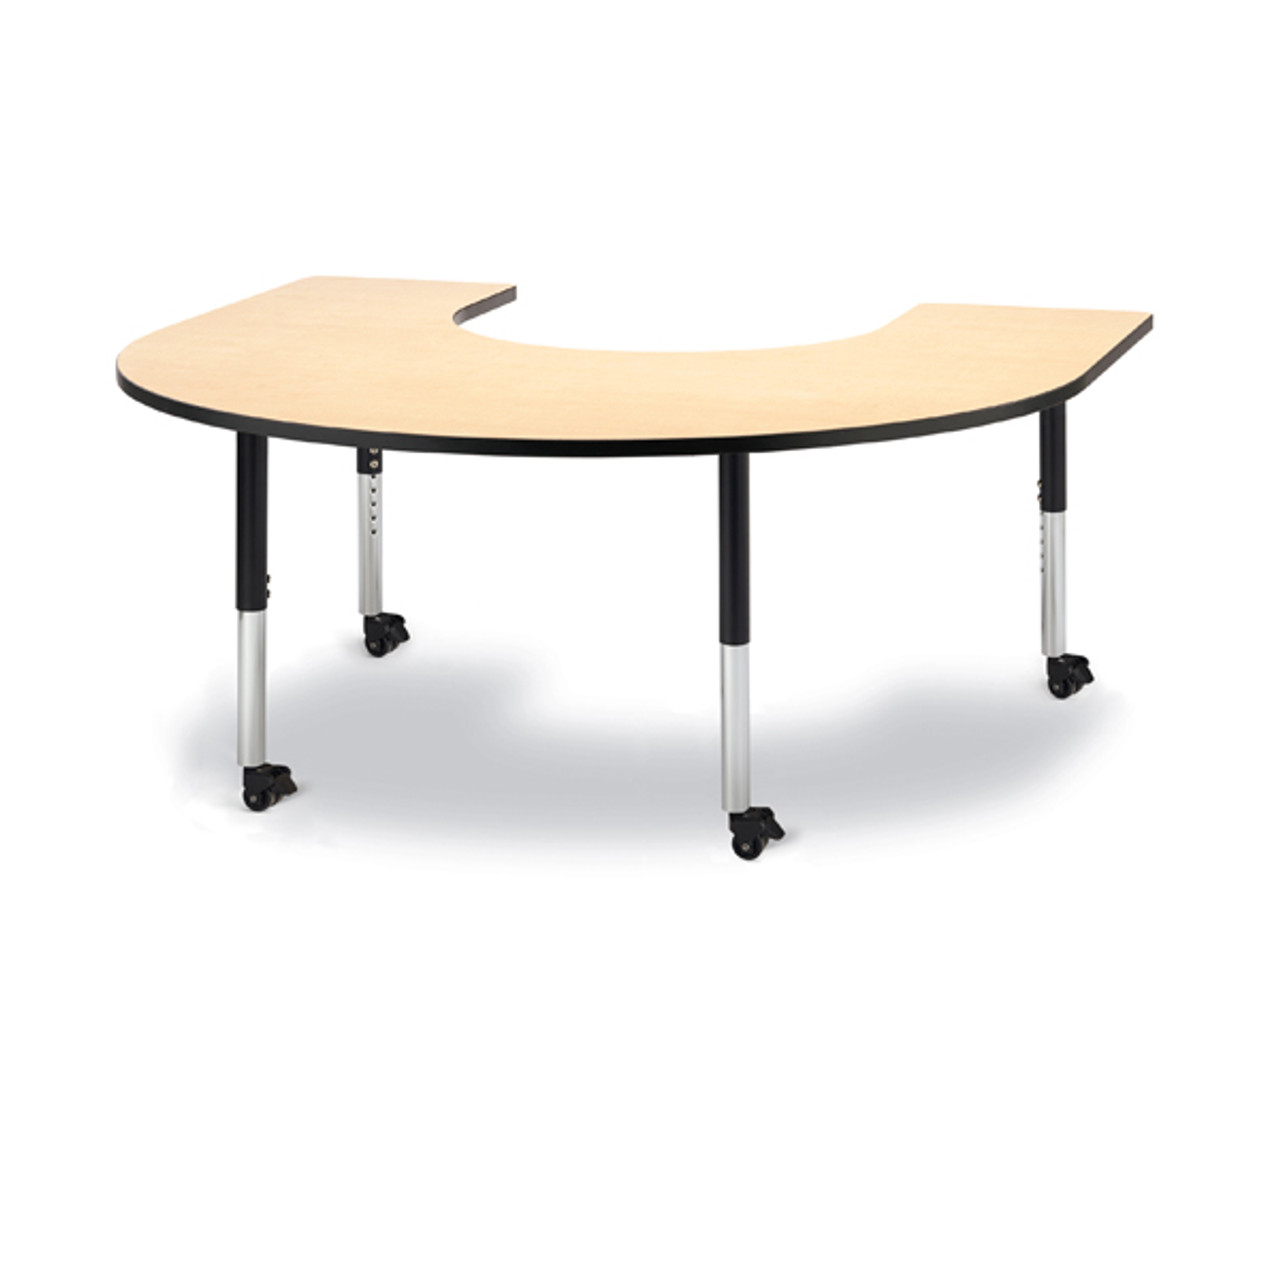 Horseshoe Activity Table 66W x 60D, 20-31 Height - Maple/Black/Black